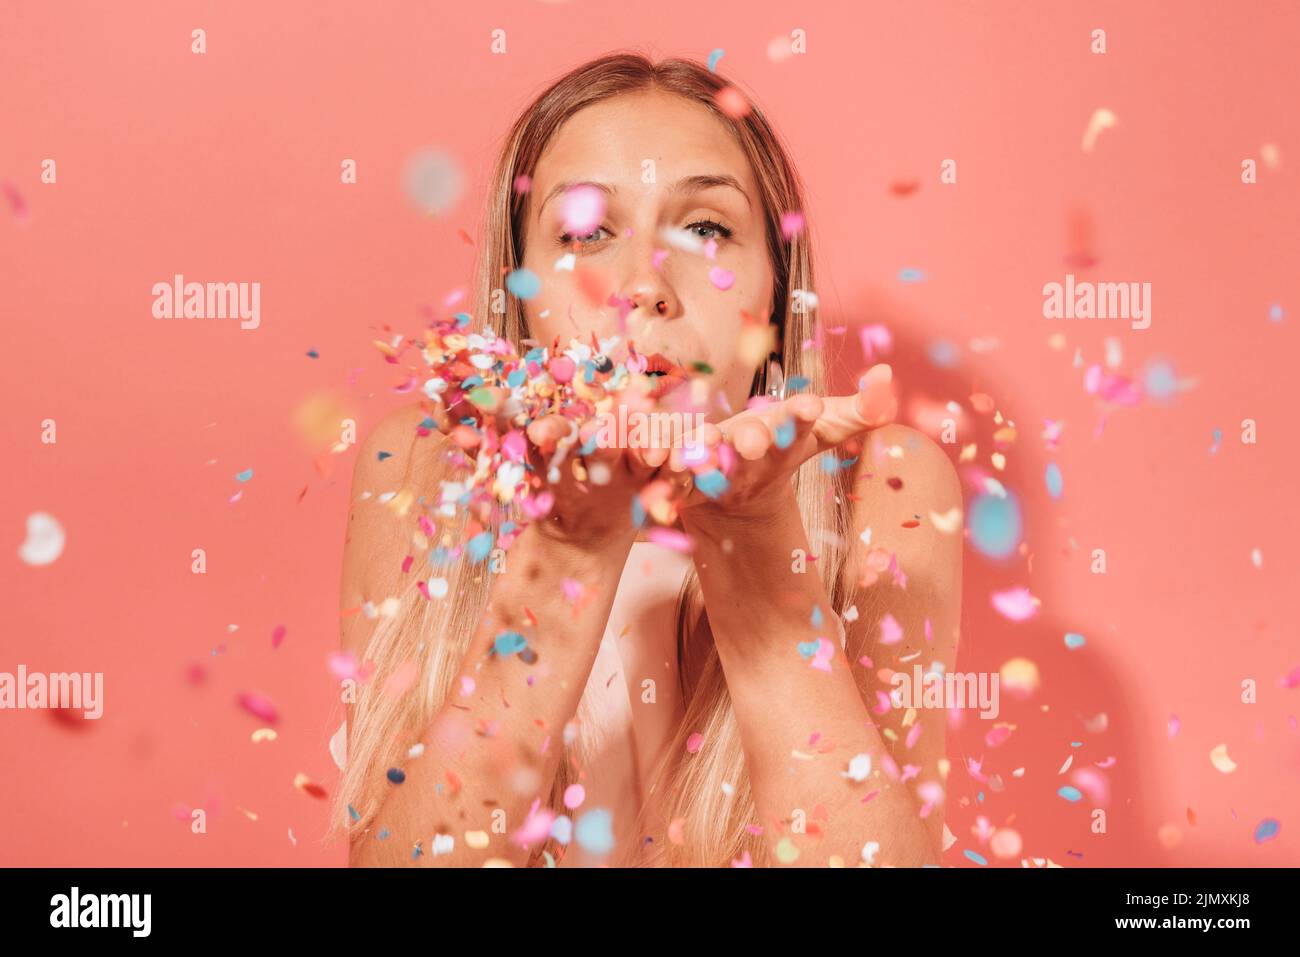 Girl blowing confetti Stock Photo